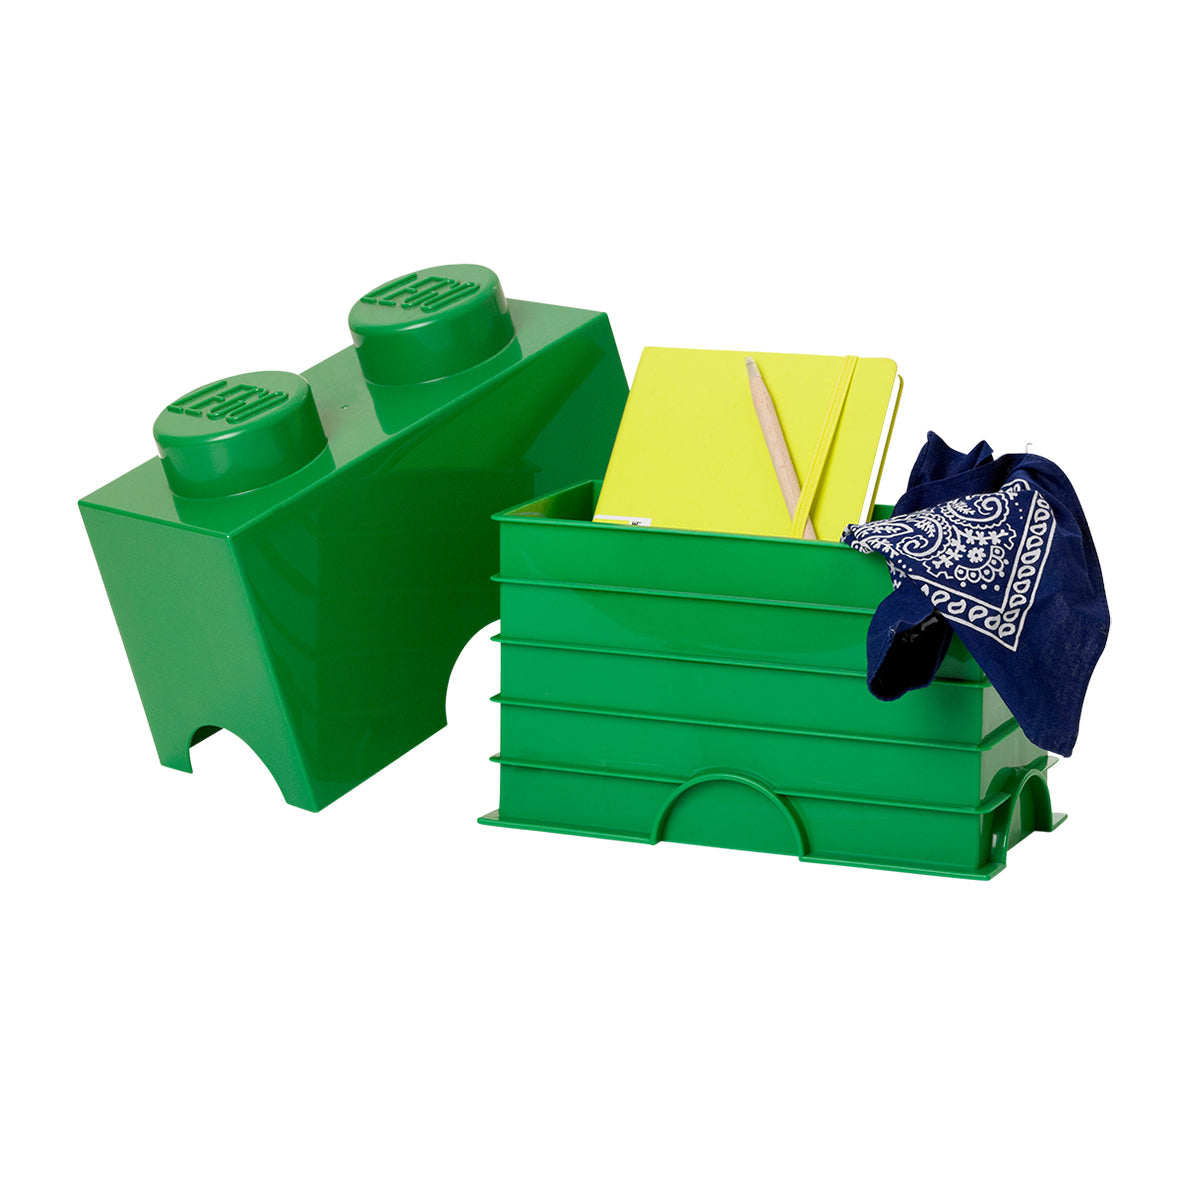 LEGO Brick Storage Box, Small - Green